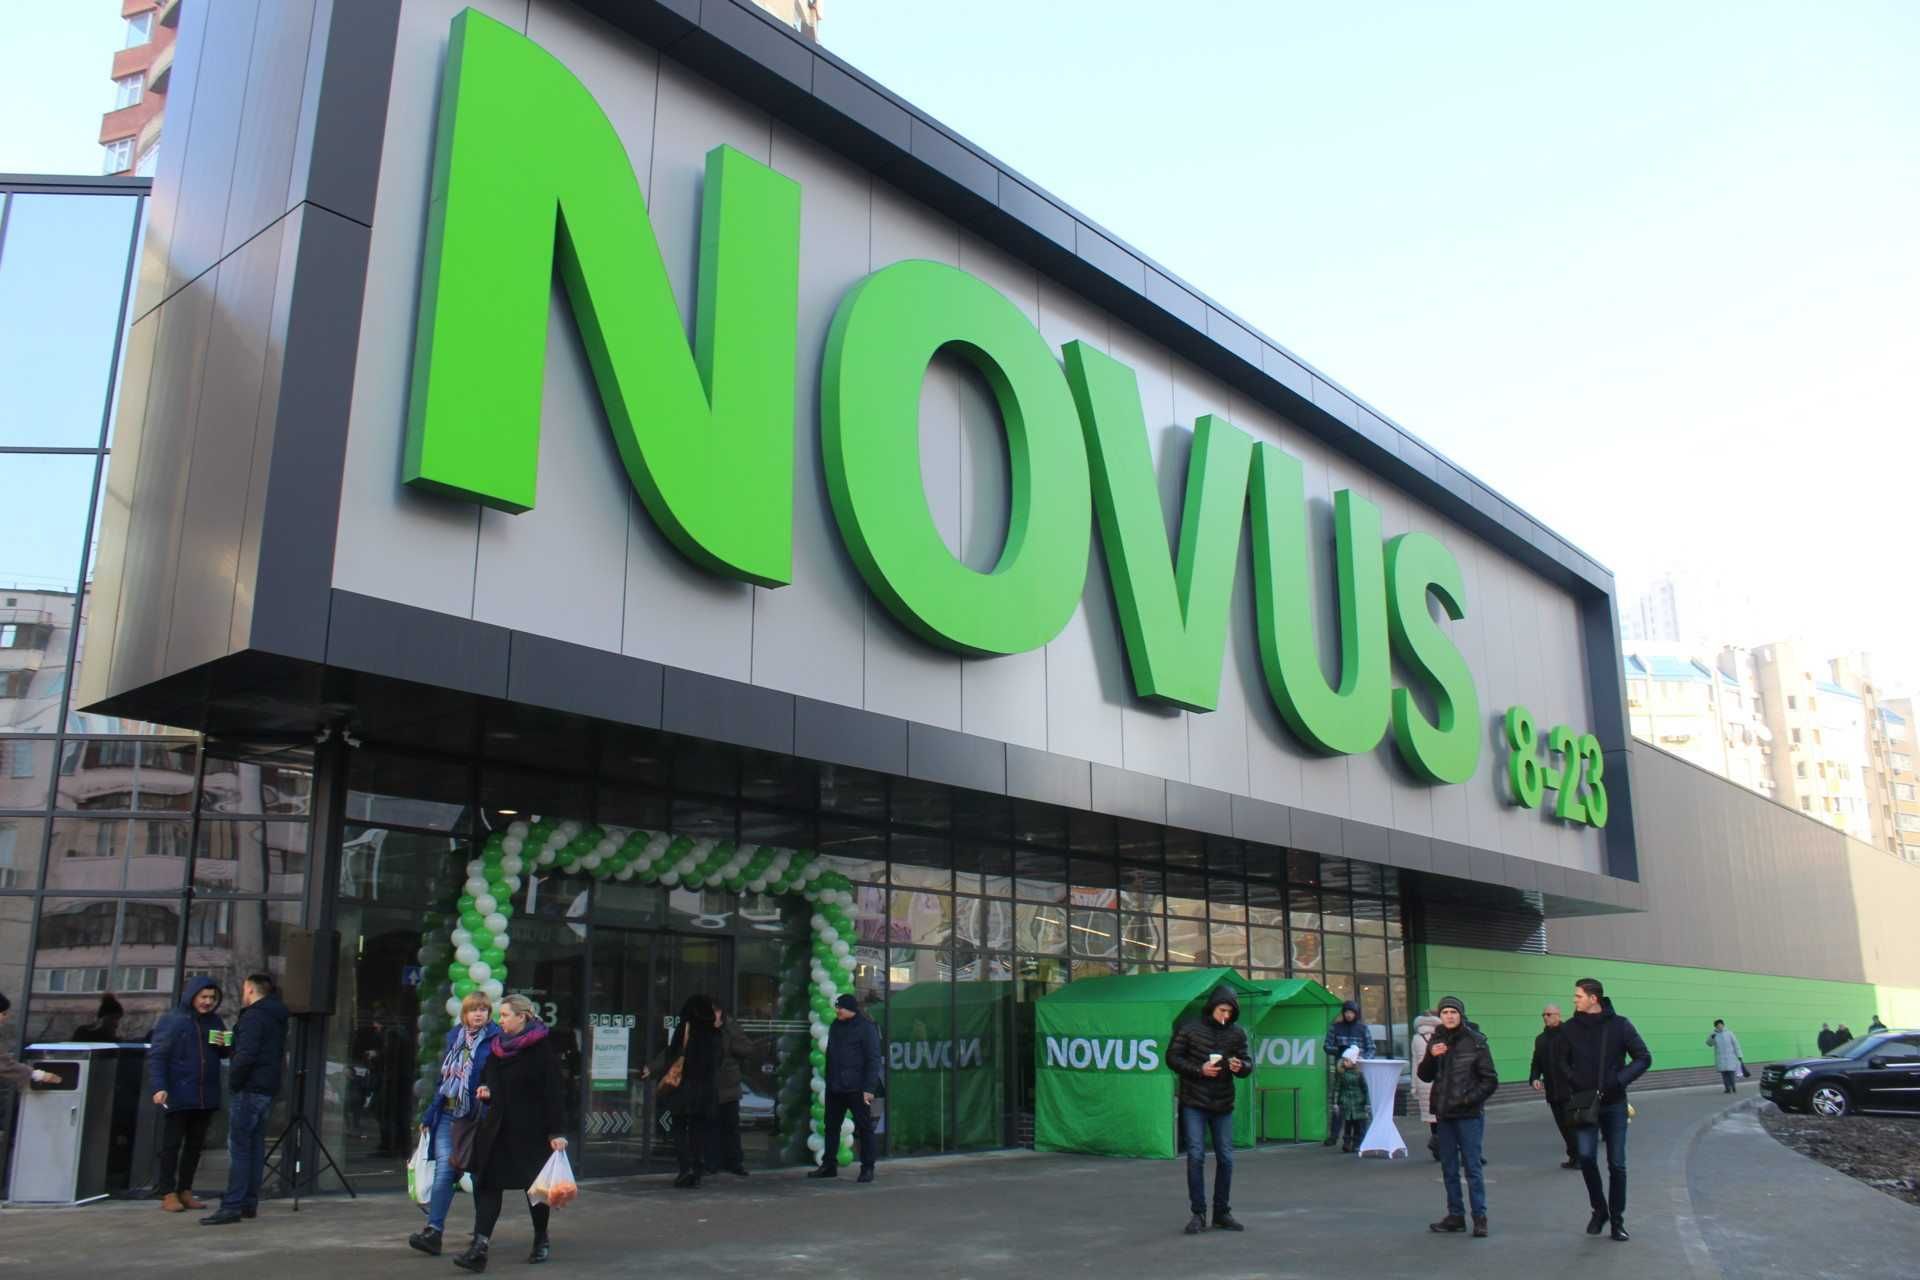 Сертифікат Novus 1000 за 750 грн (Супермаркет)